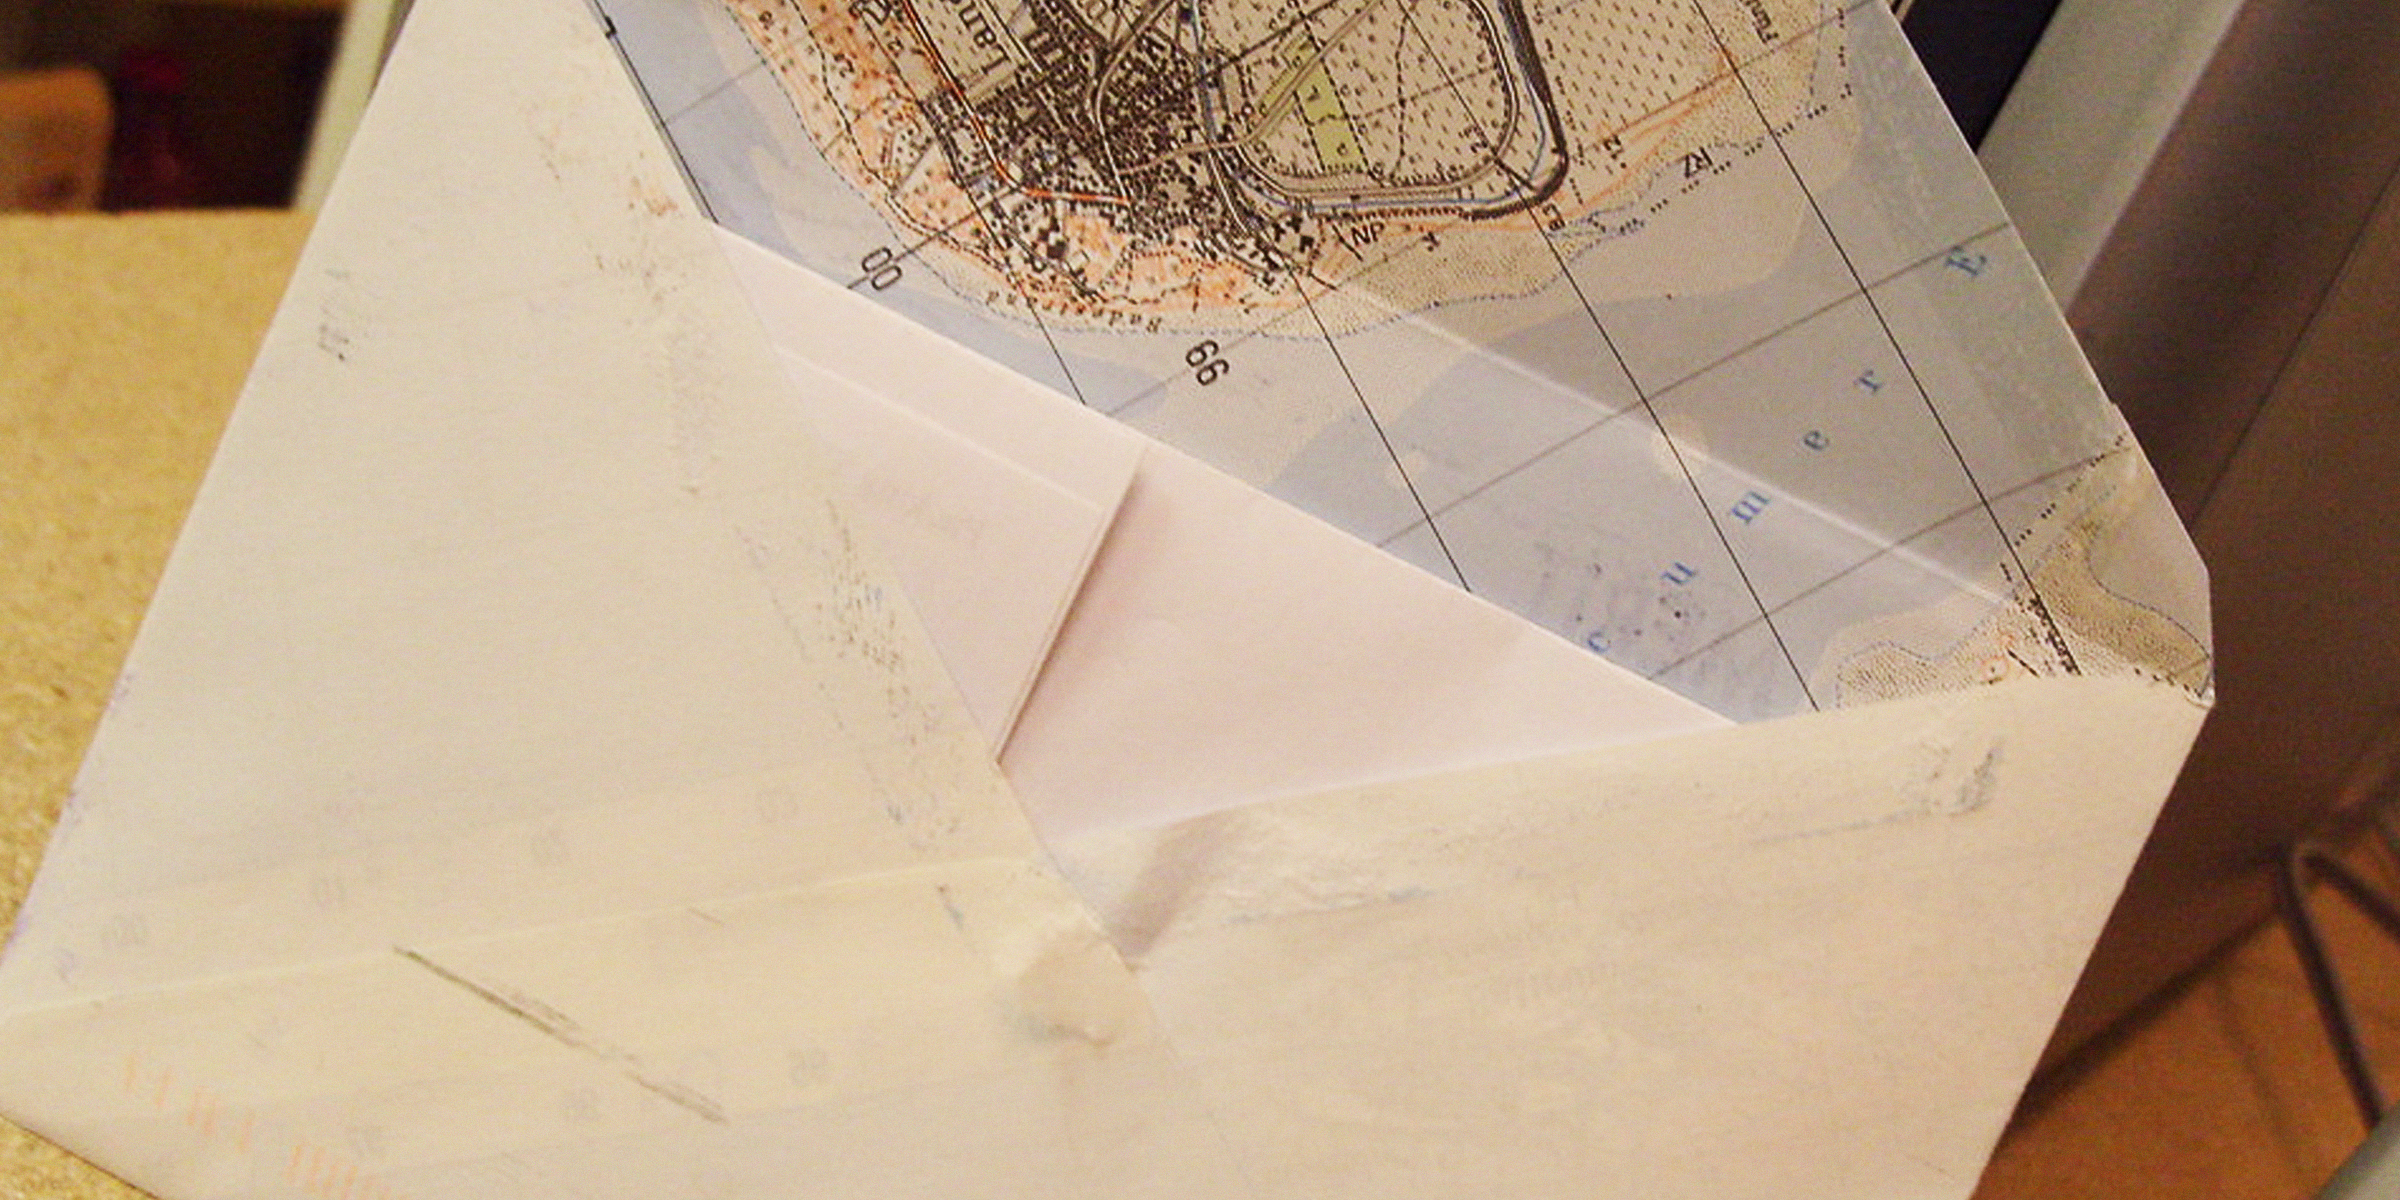 Envelope with Paper Inside. | Source: Flickr